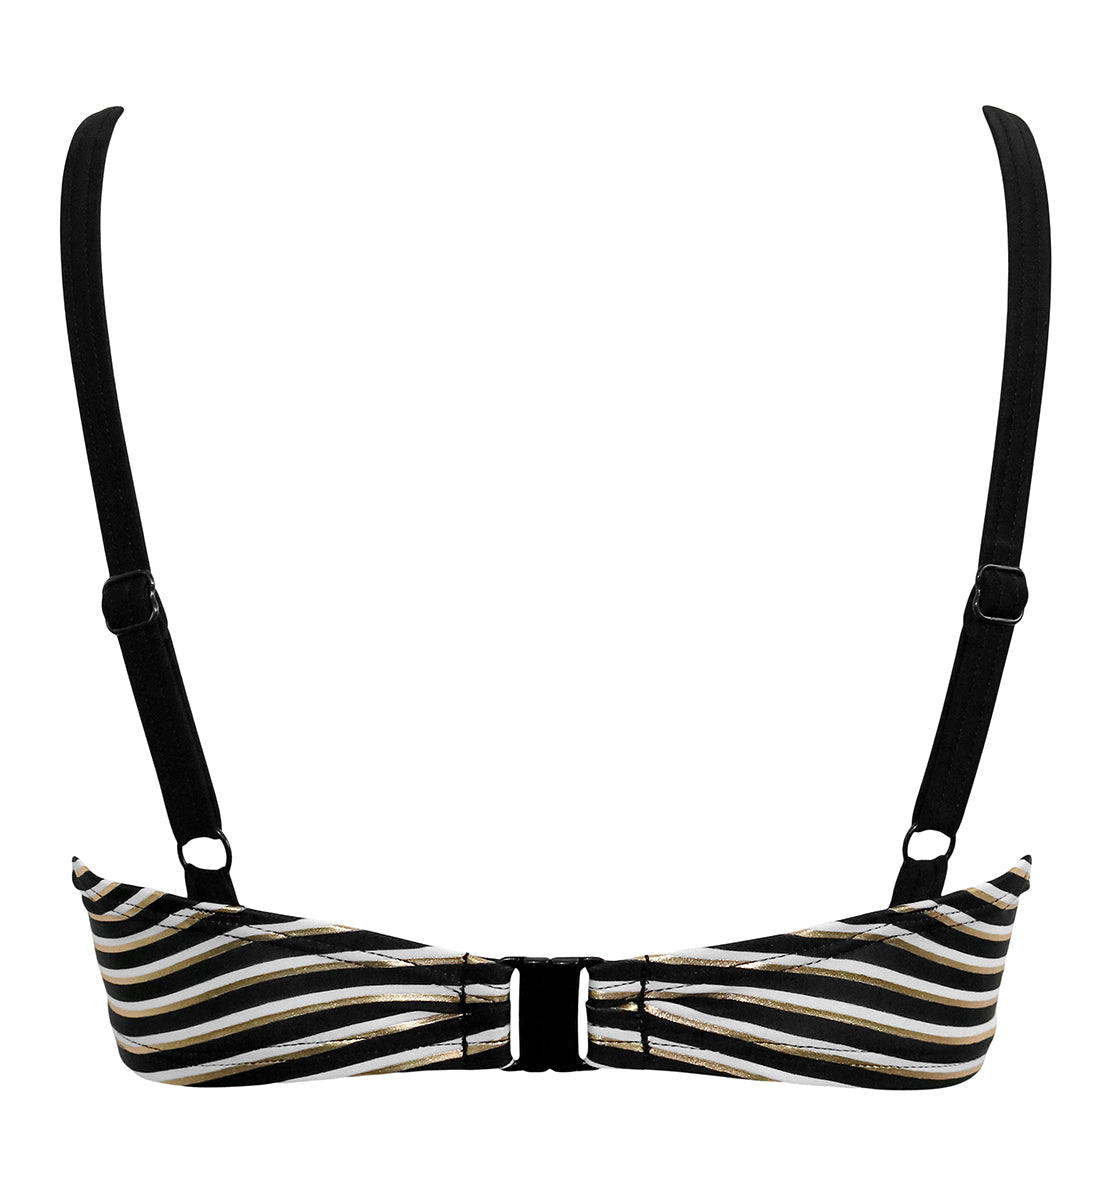 Pour Moi Radiance Underwire Rope Swim Top (24701),32D,Black/White/Gold - Black/White/Gold,32D